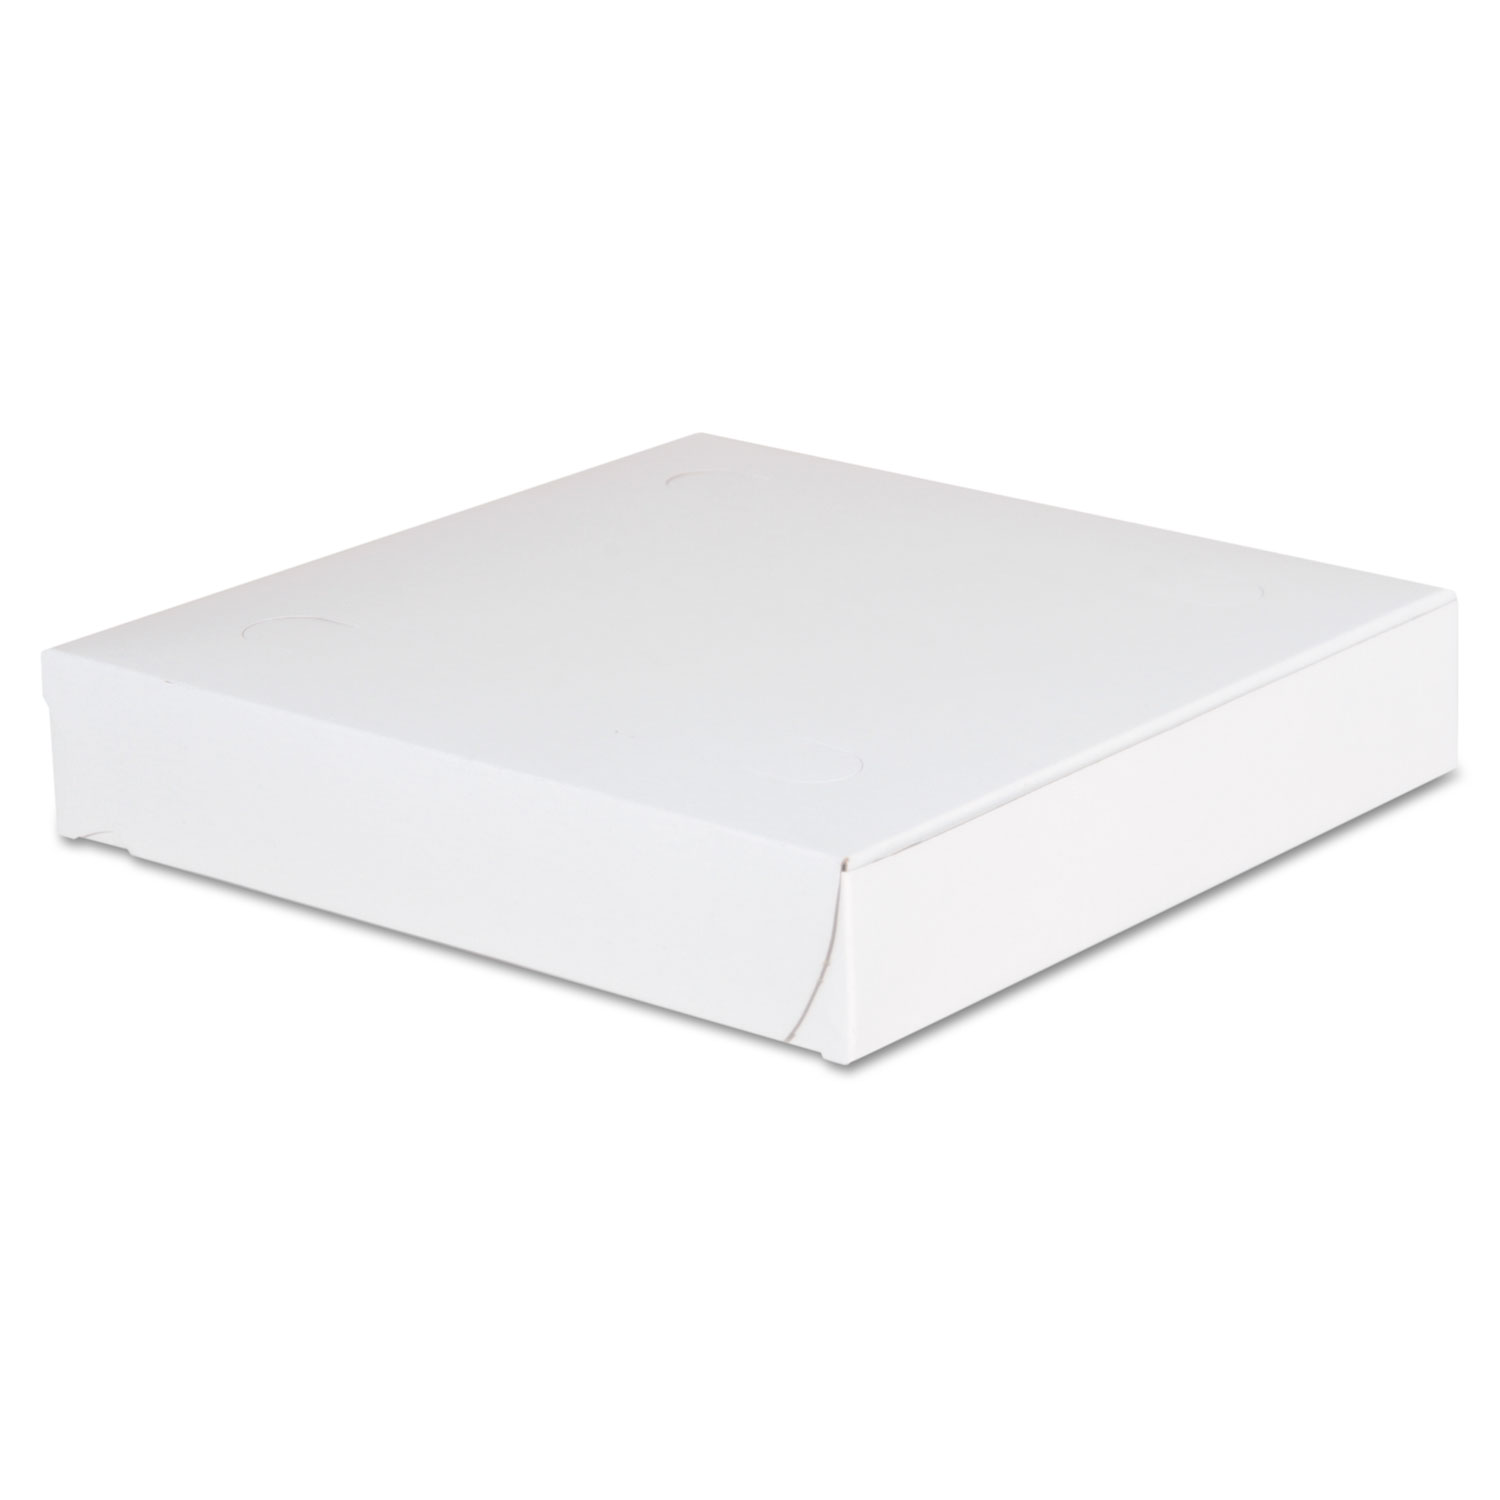  SCT 1401 Lock-Corner Pizza Boxes, 8 x 8 x 1 1/2, White, 100/Carton (SCH1401) 